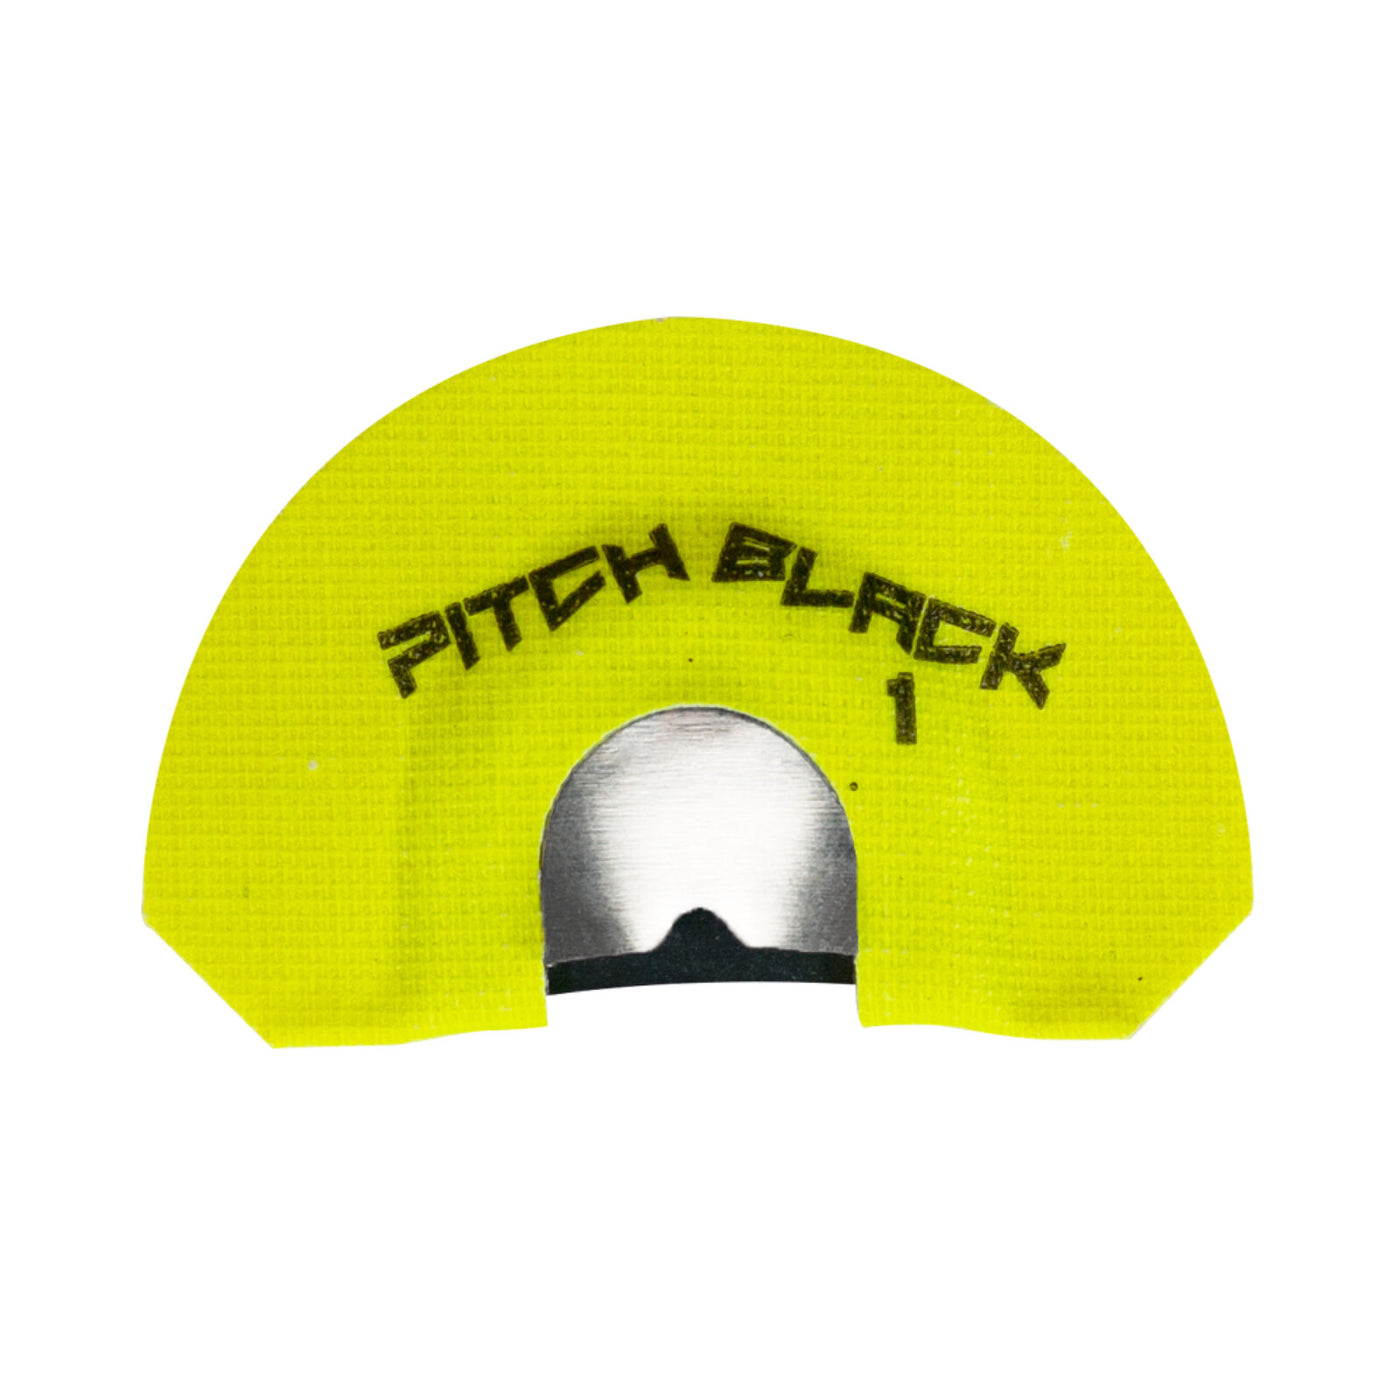 Phelps Pitch Black 1 Elk Call